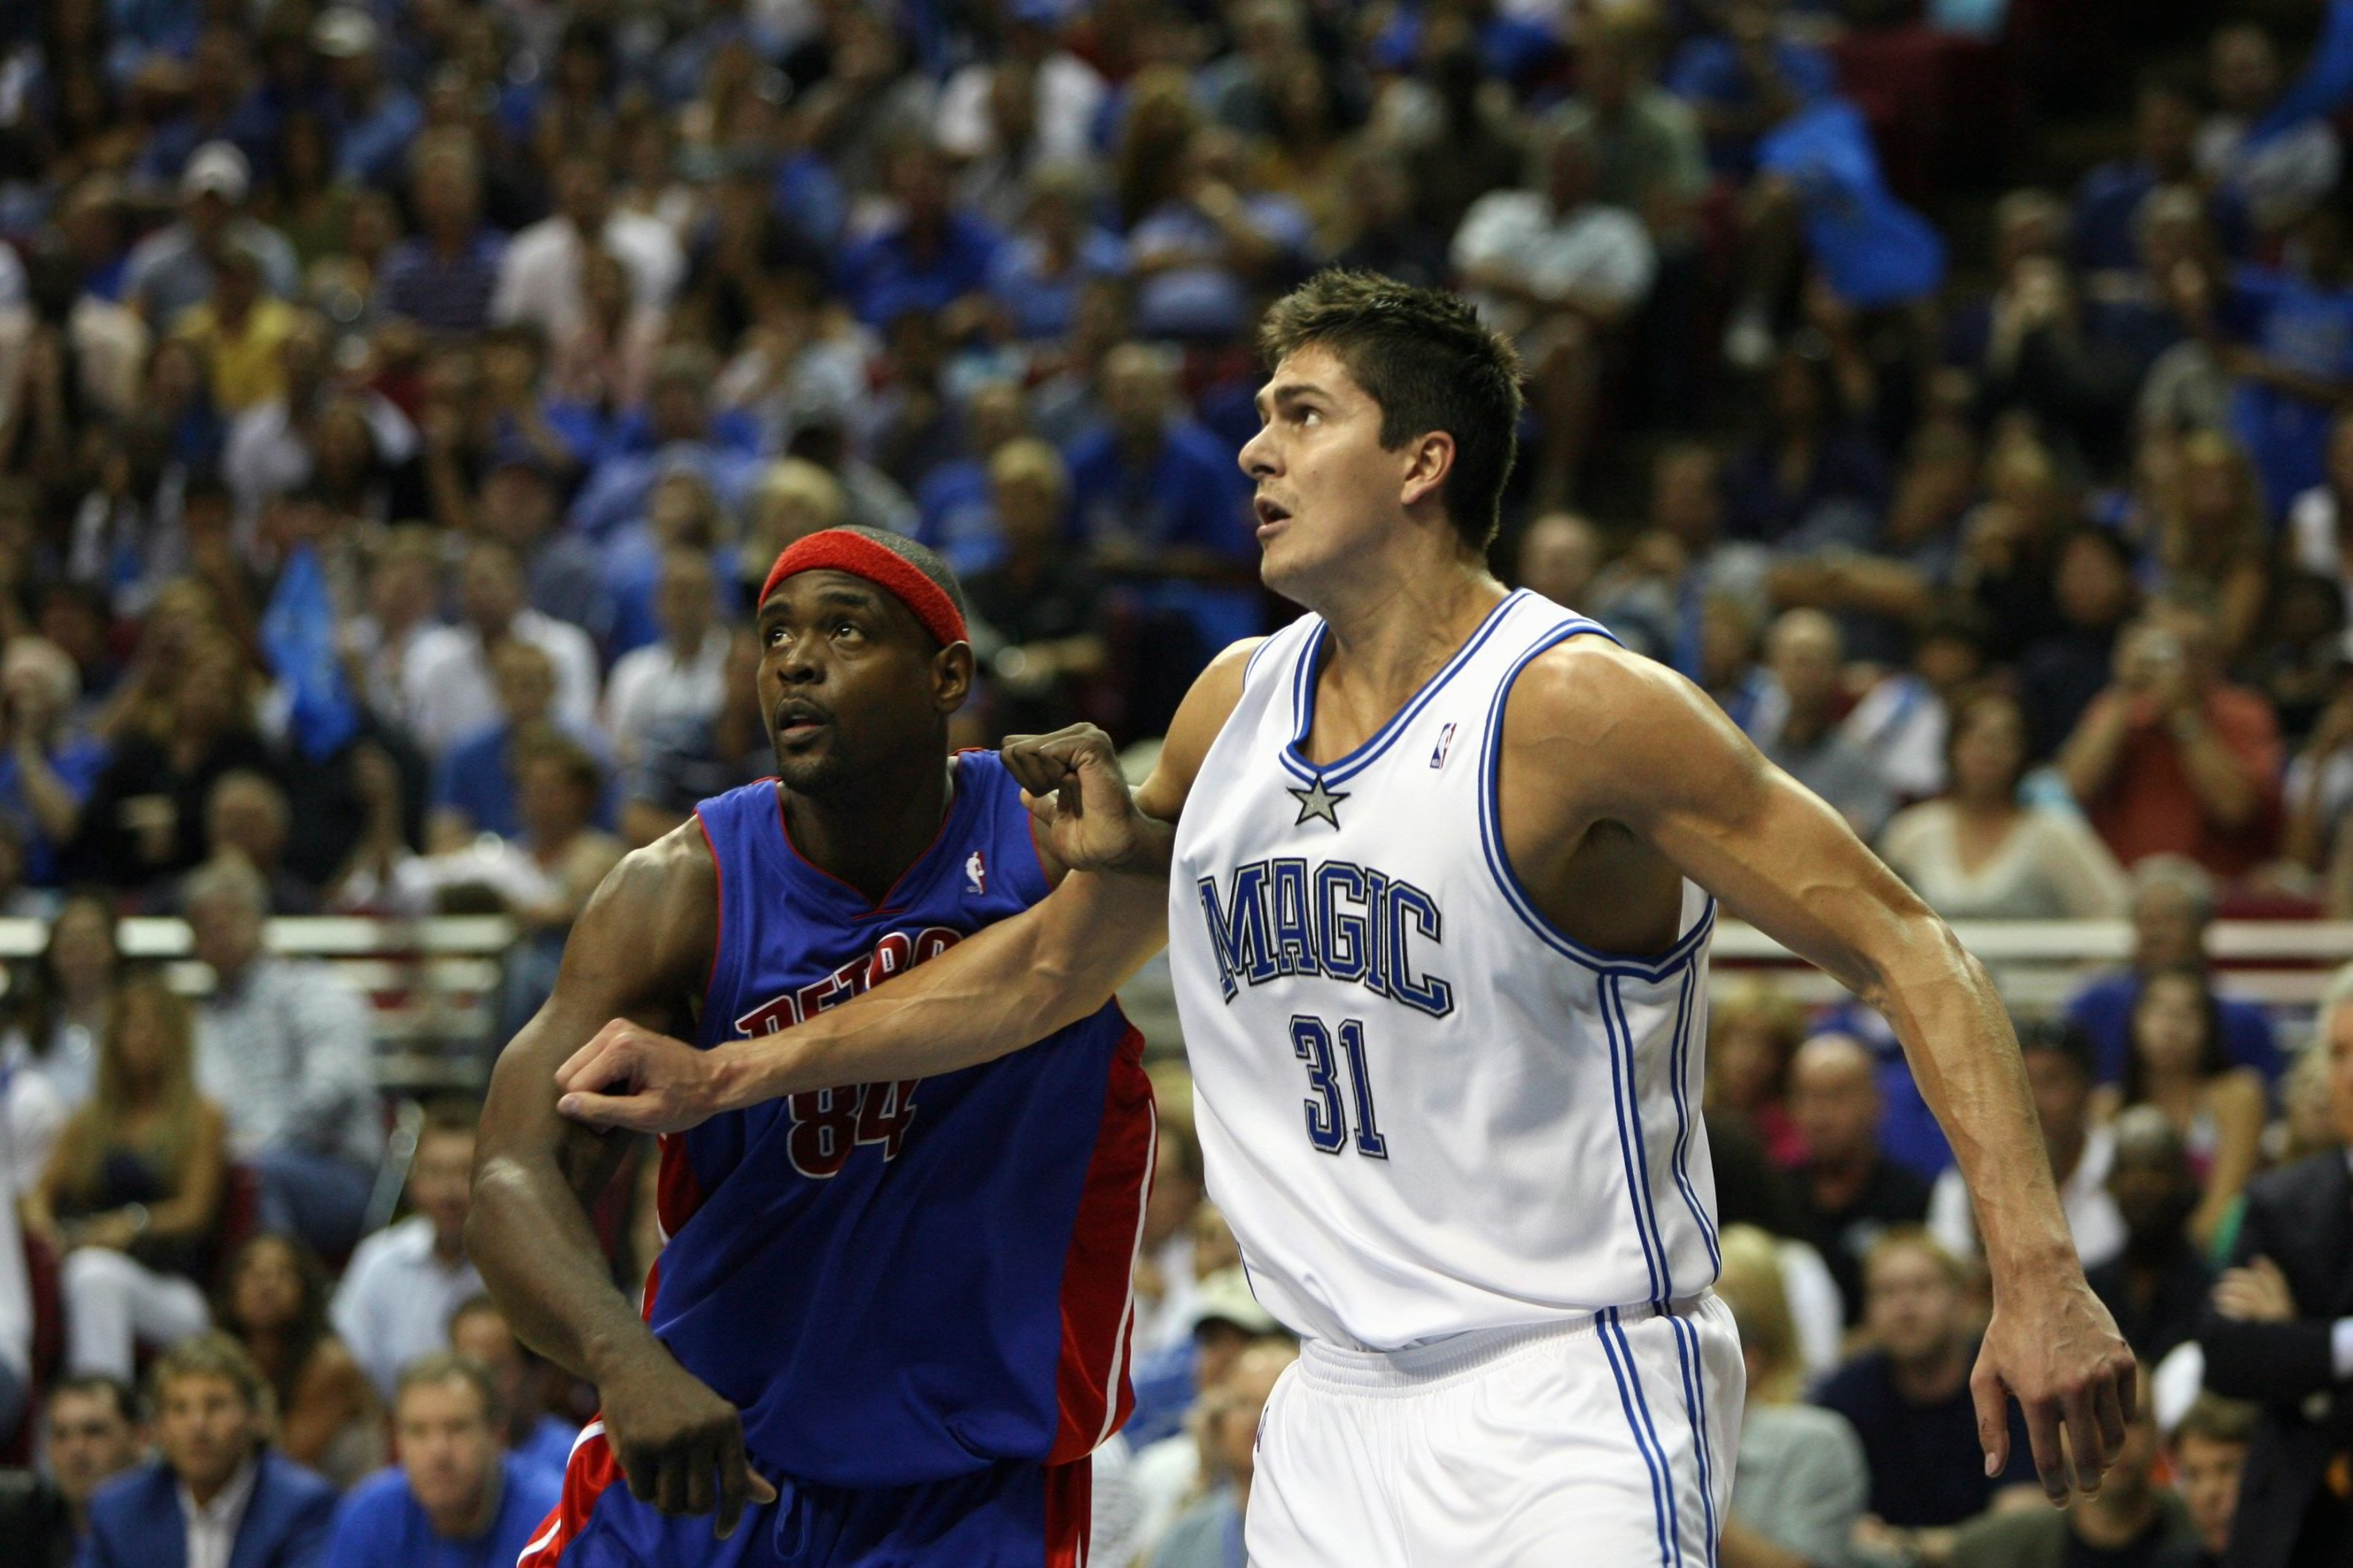 Serbia and Montenegro's Darko Milicic, left, of the NBA's Orlando